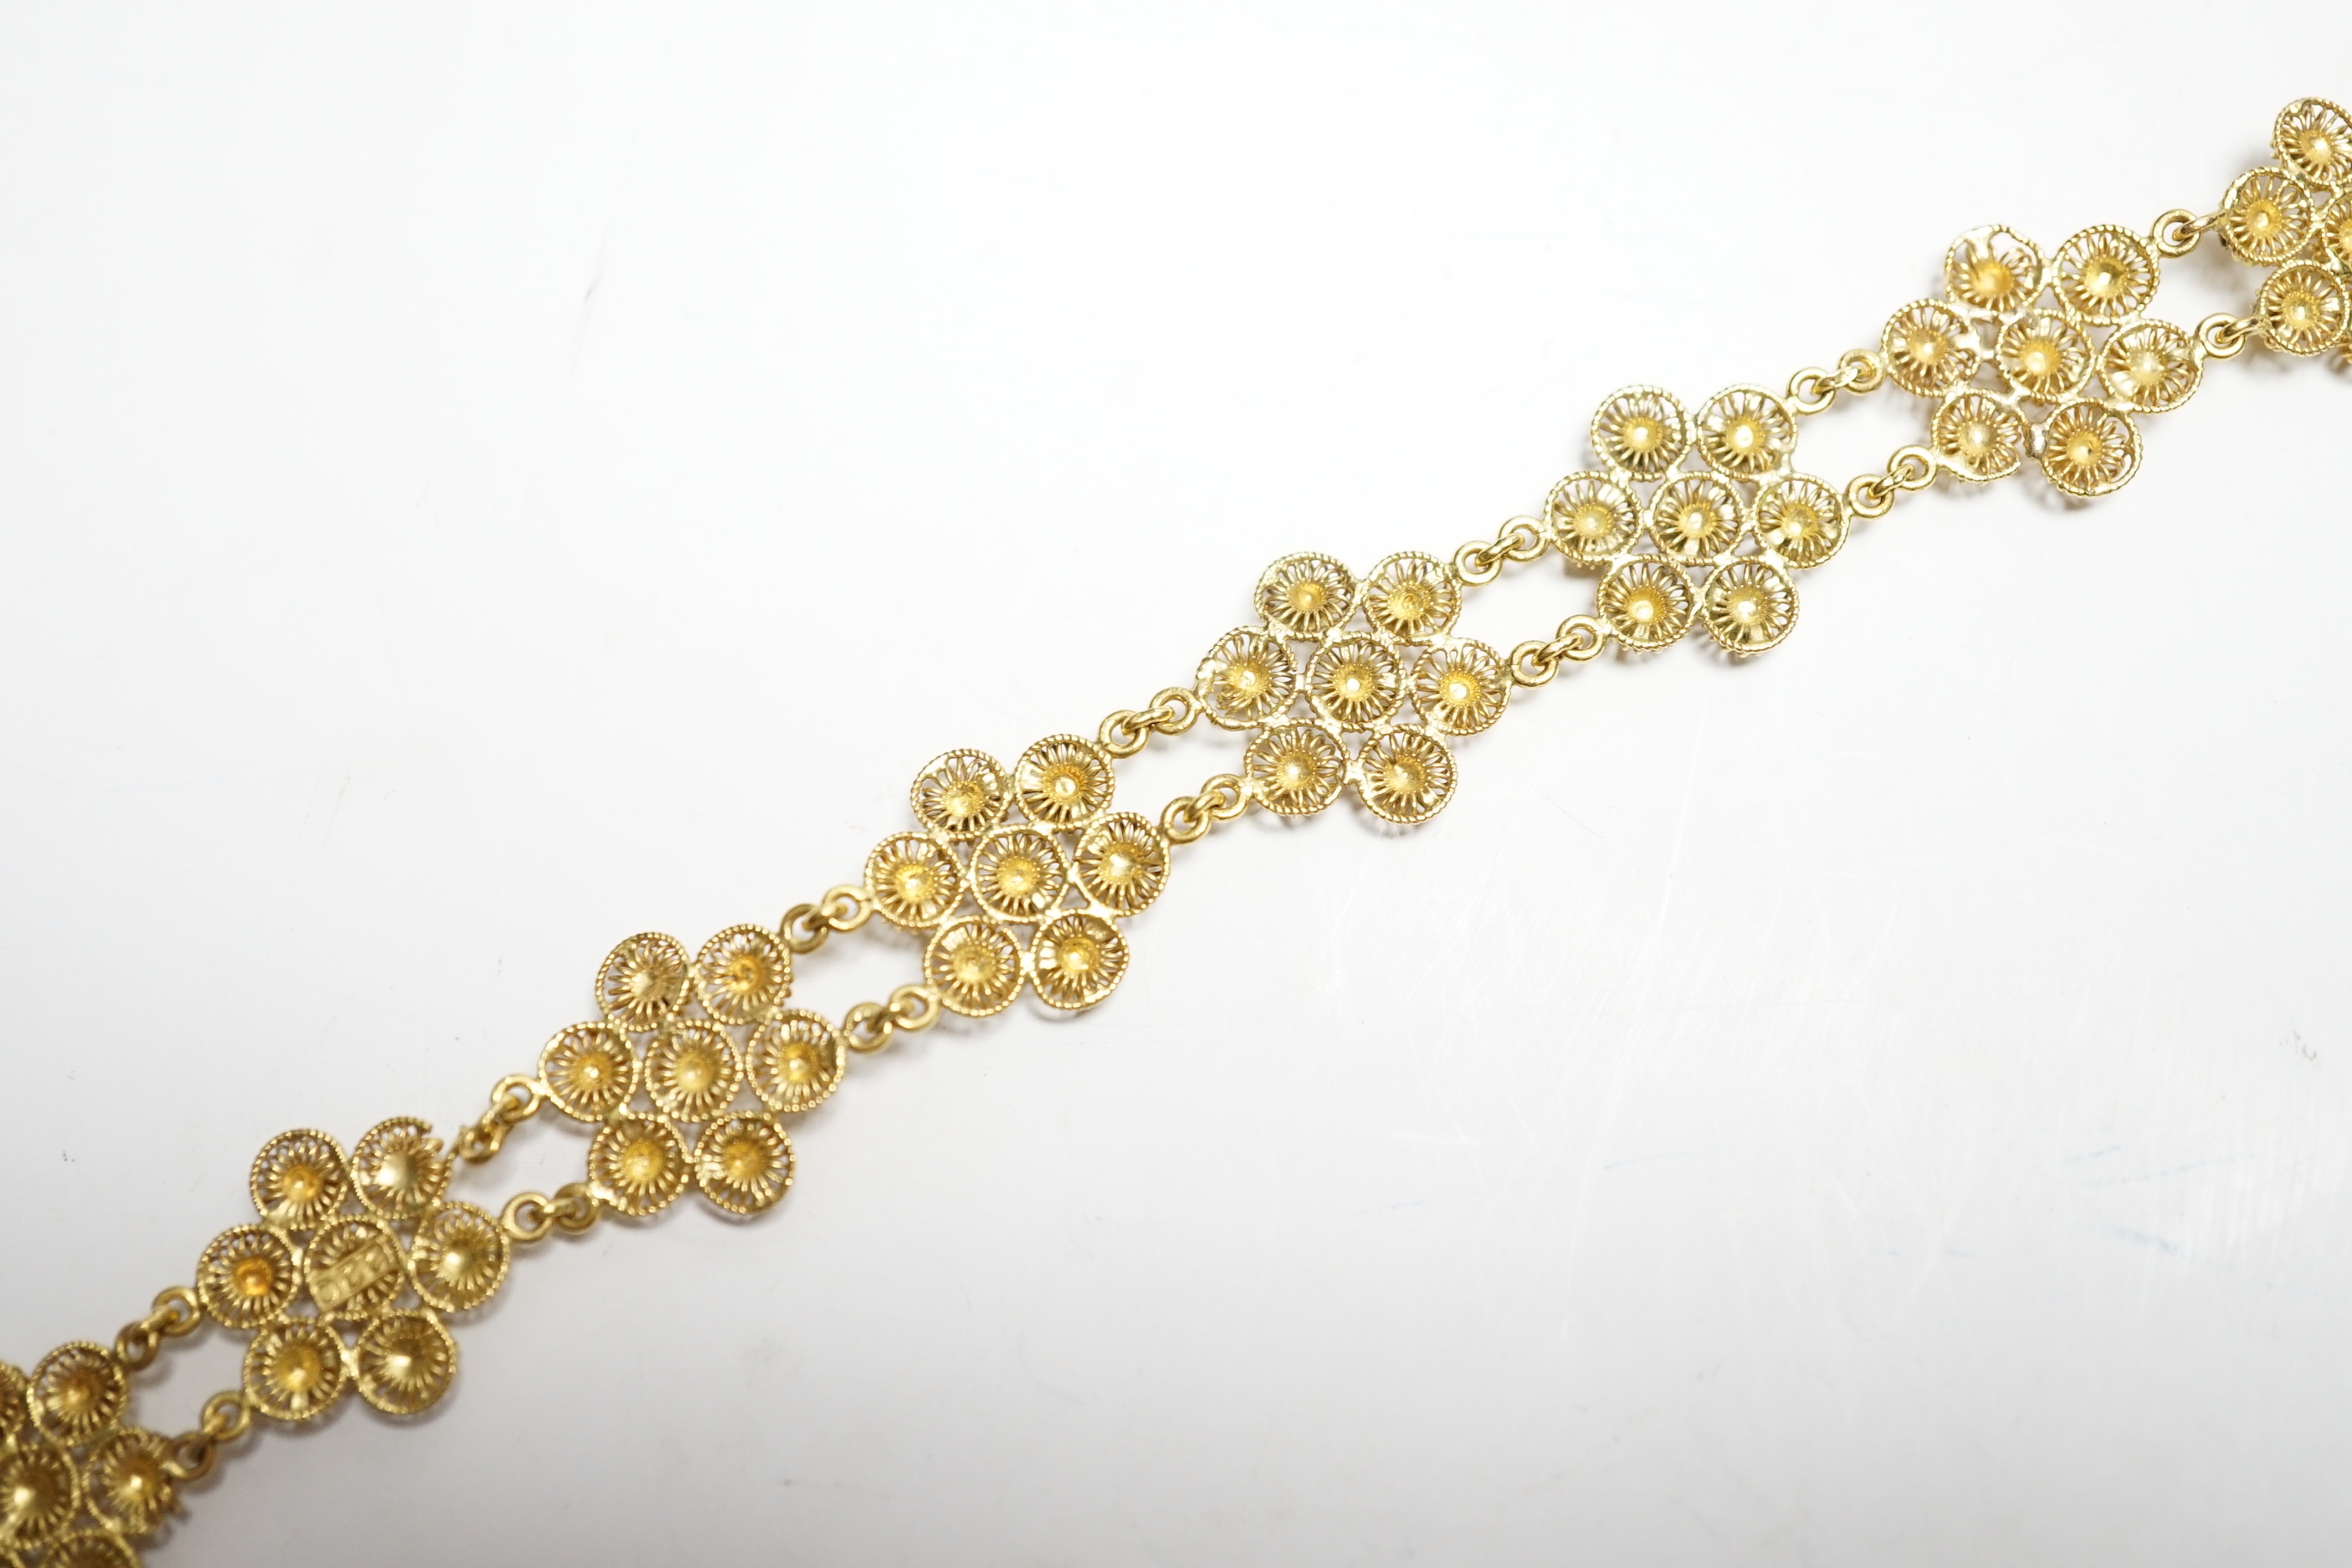 A yellow metal 'bright cut engraved' flower head link bracelet, 16cm, 14.7 grams.